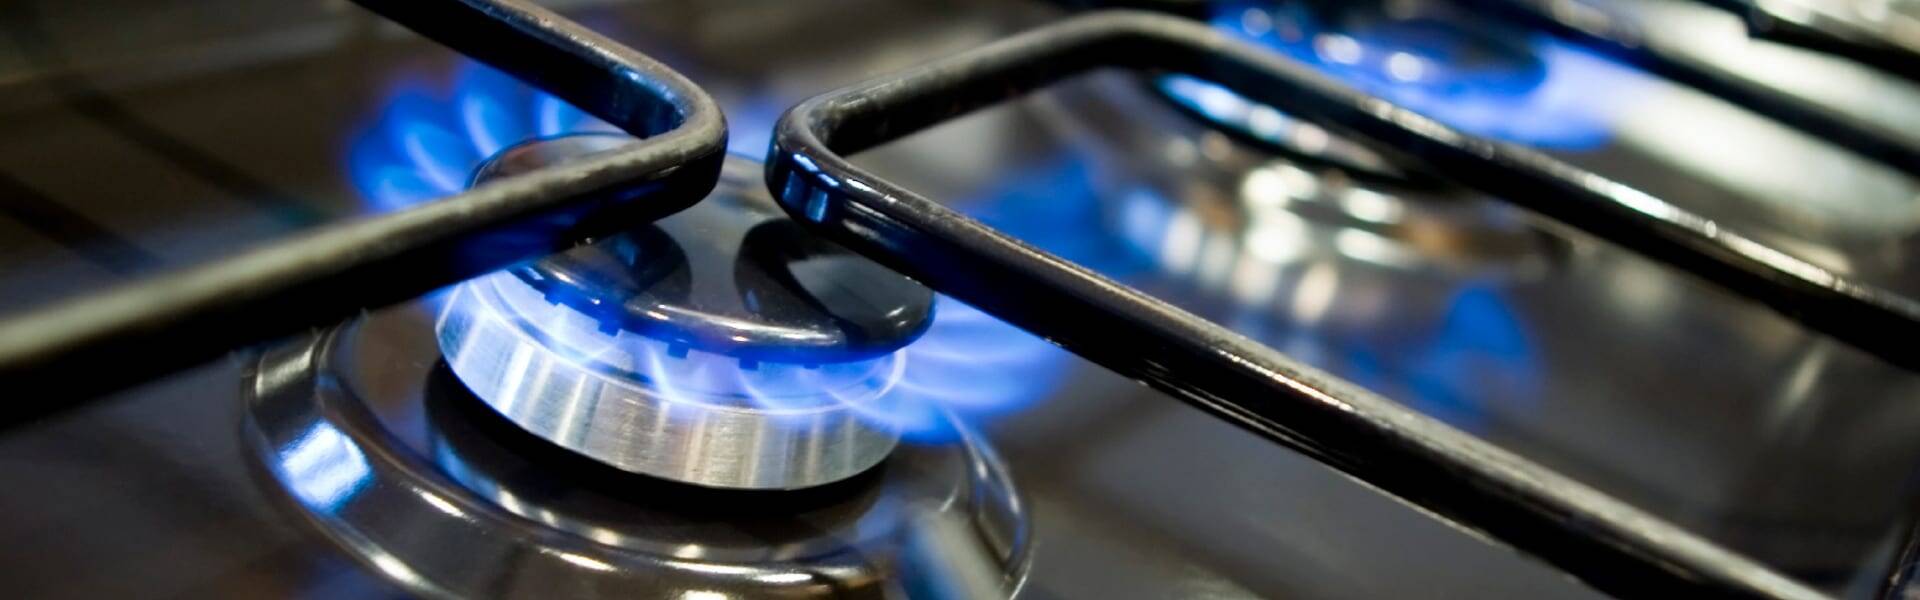 Gas trading hazards in the EU